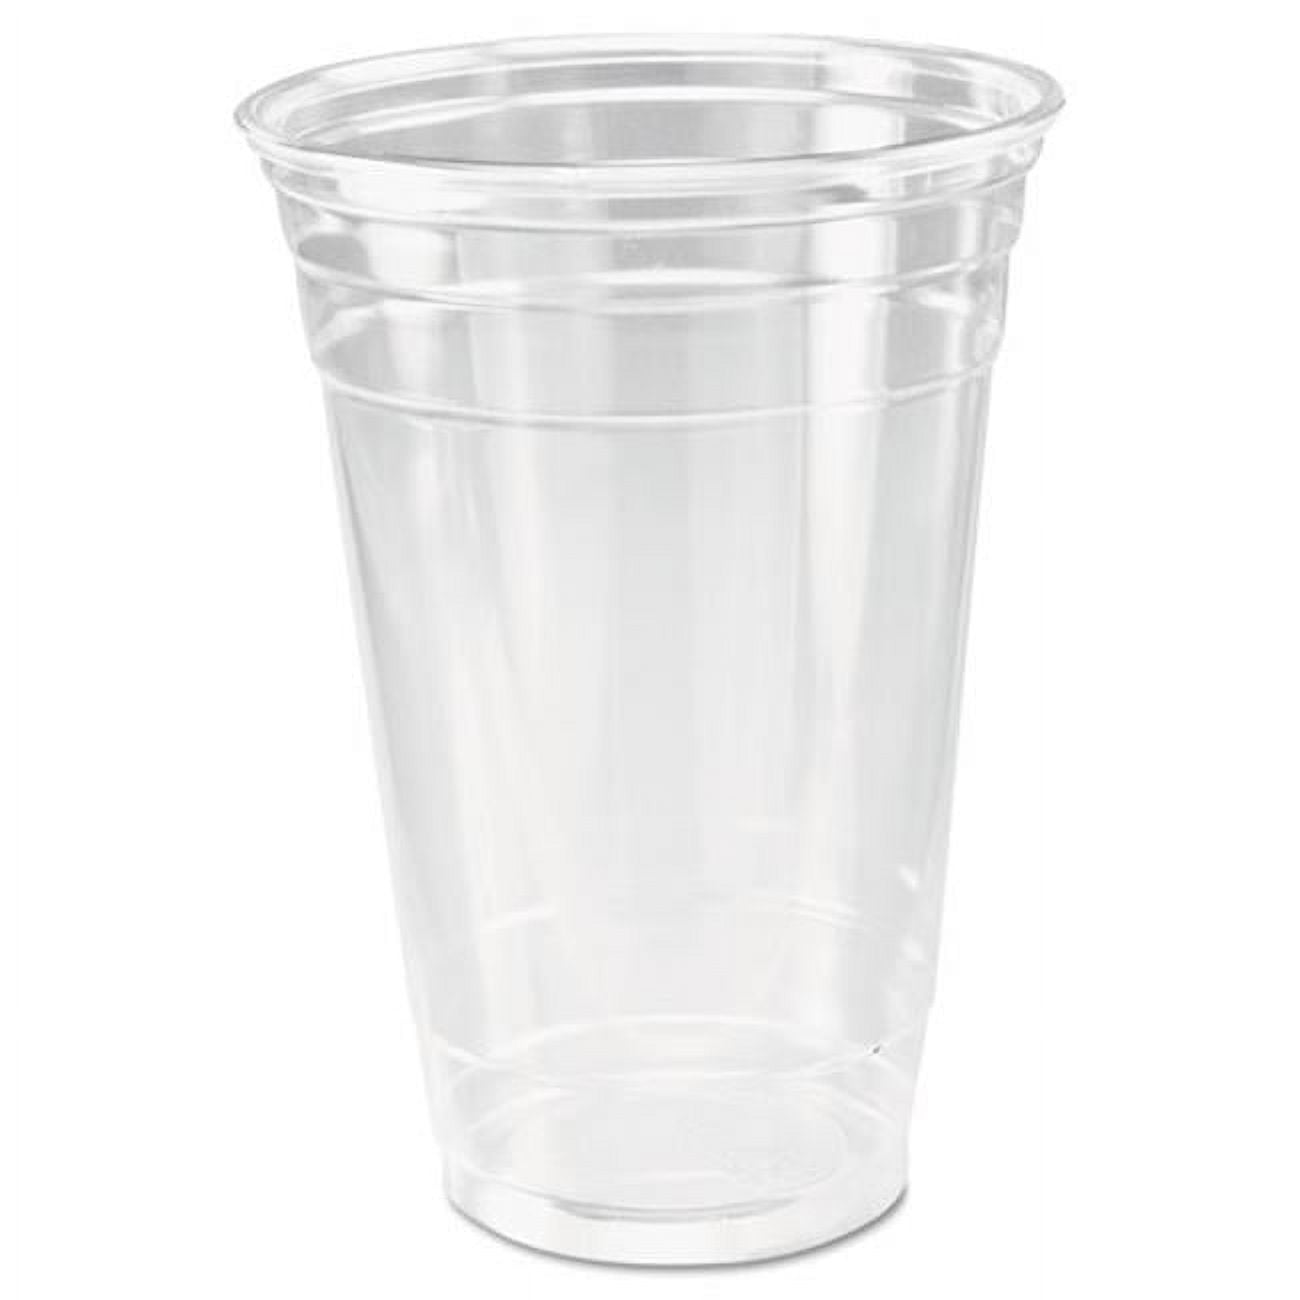 Solo Plastic Disposable Cups 12 fl oz 20 Carton Clear PETE Plastic